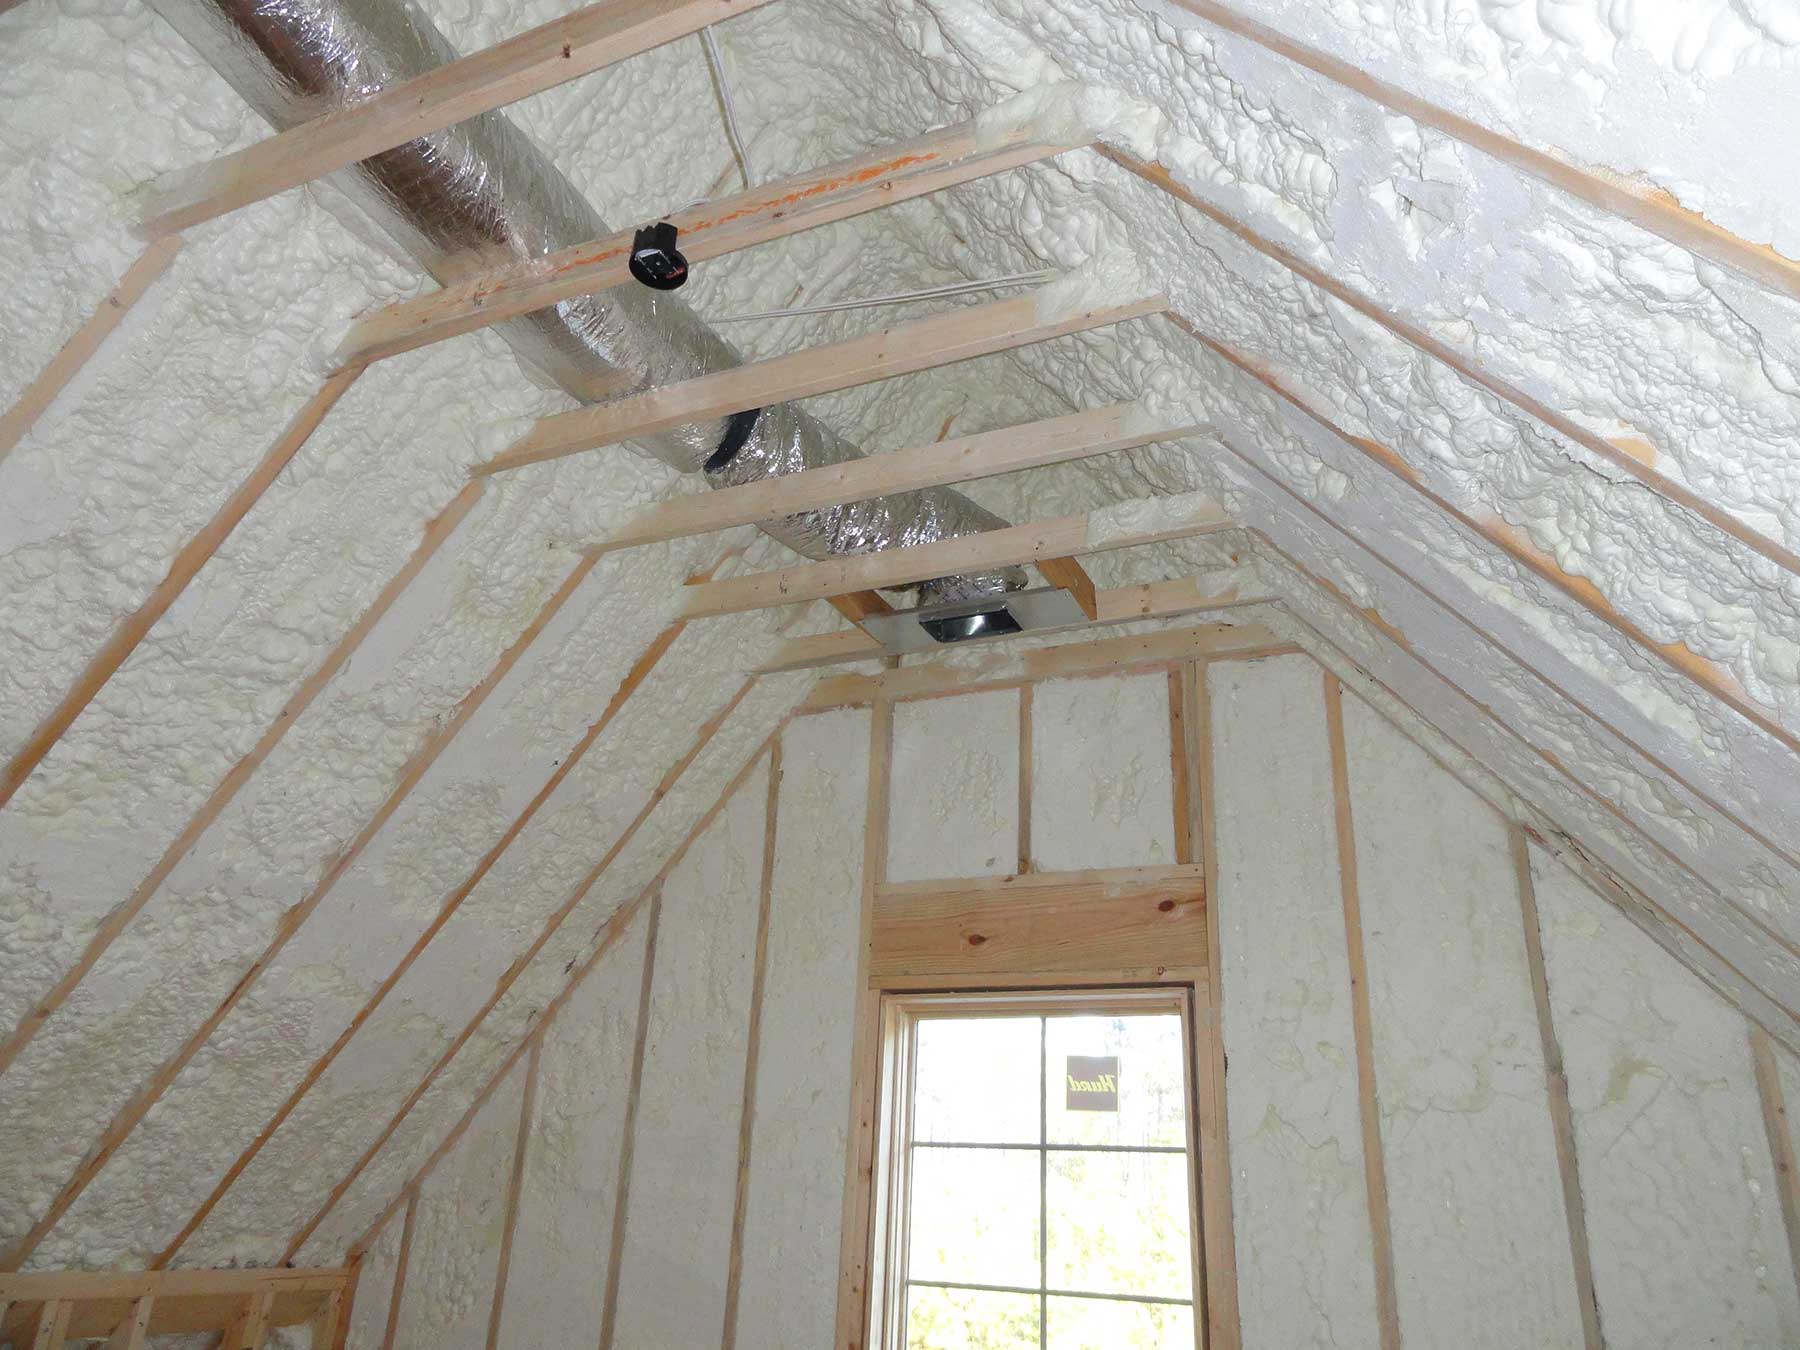 spray-in insulation